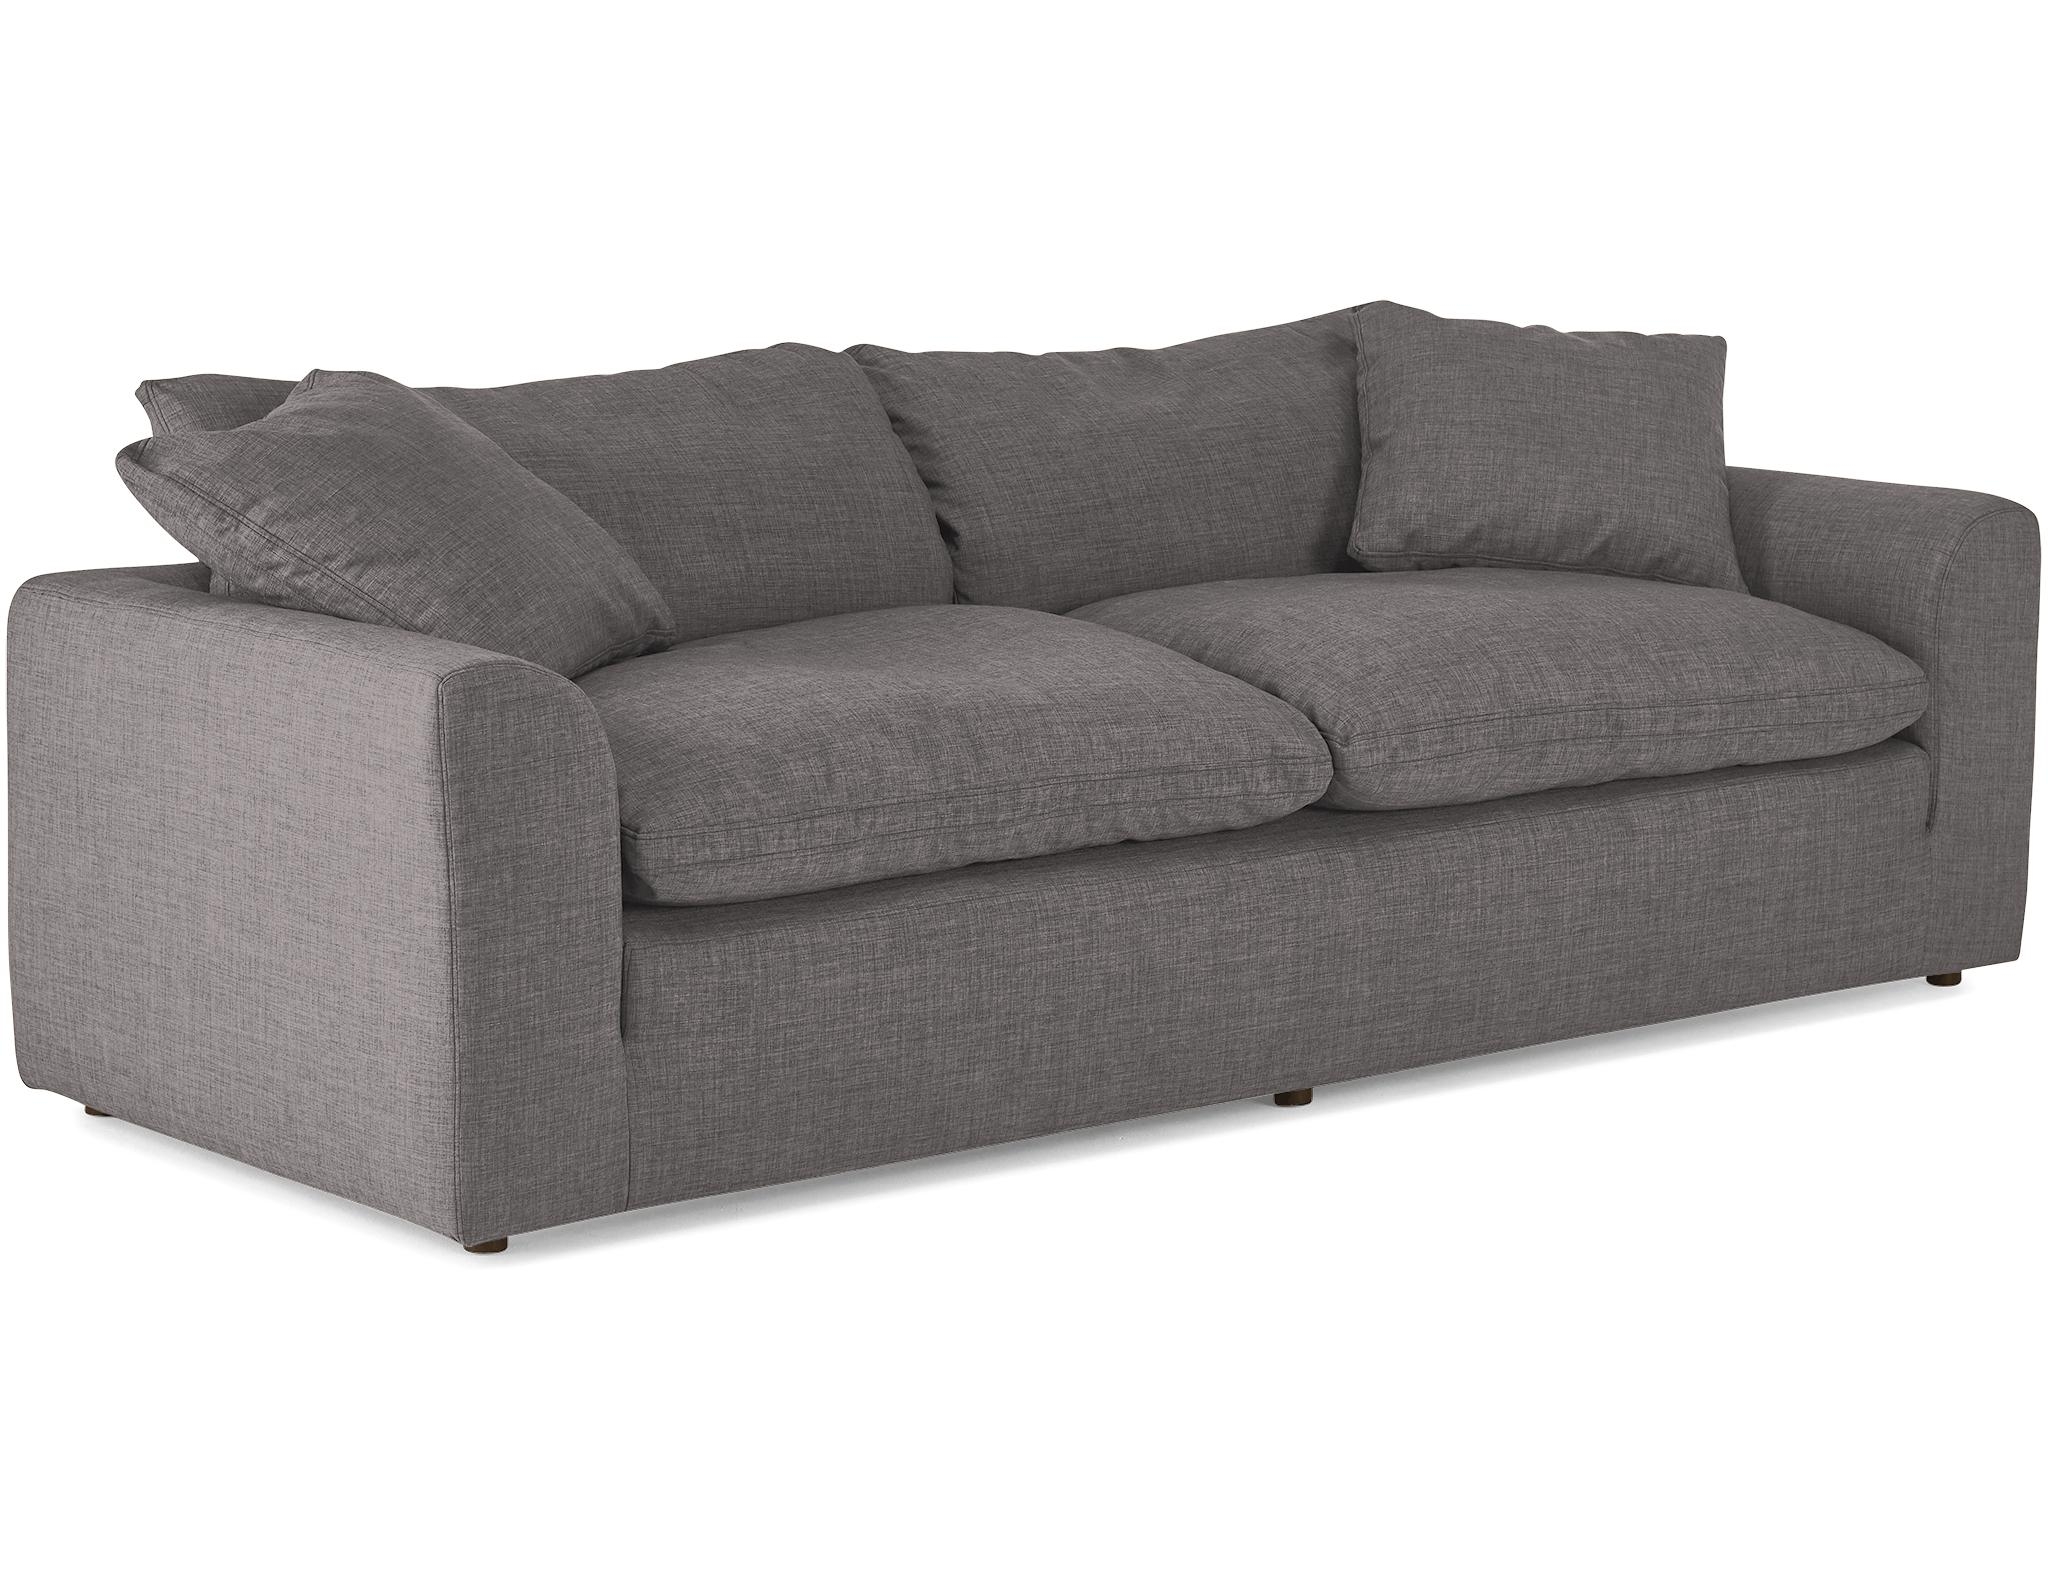 Gray Bryant Mid Century Modern Sofa - Taylor Felt Grey - Image 1